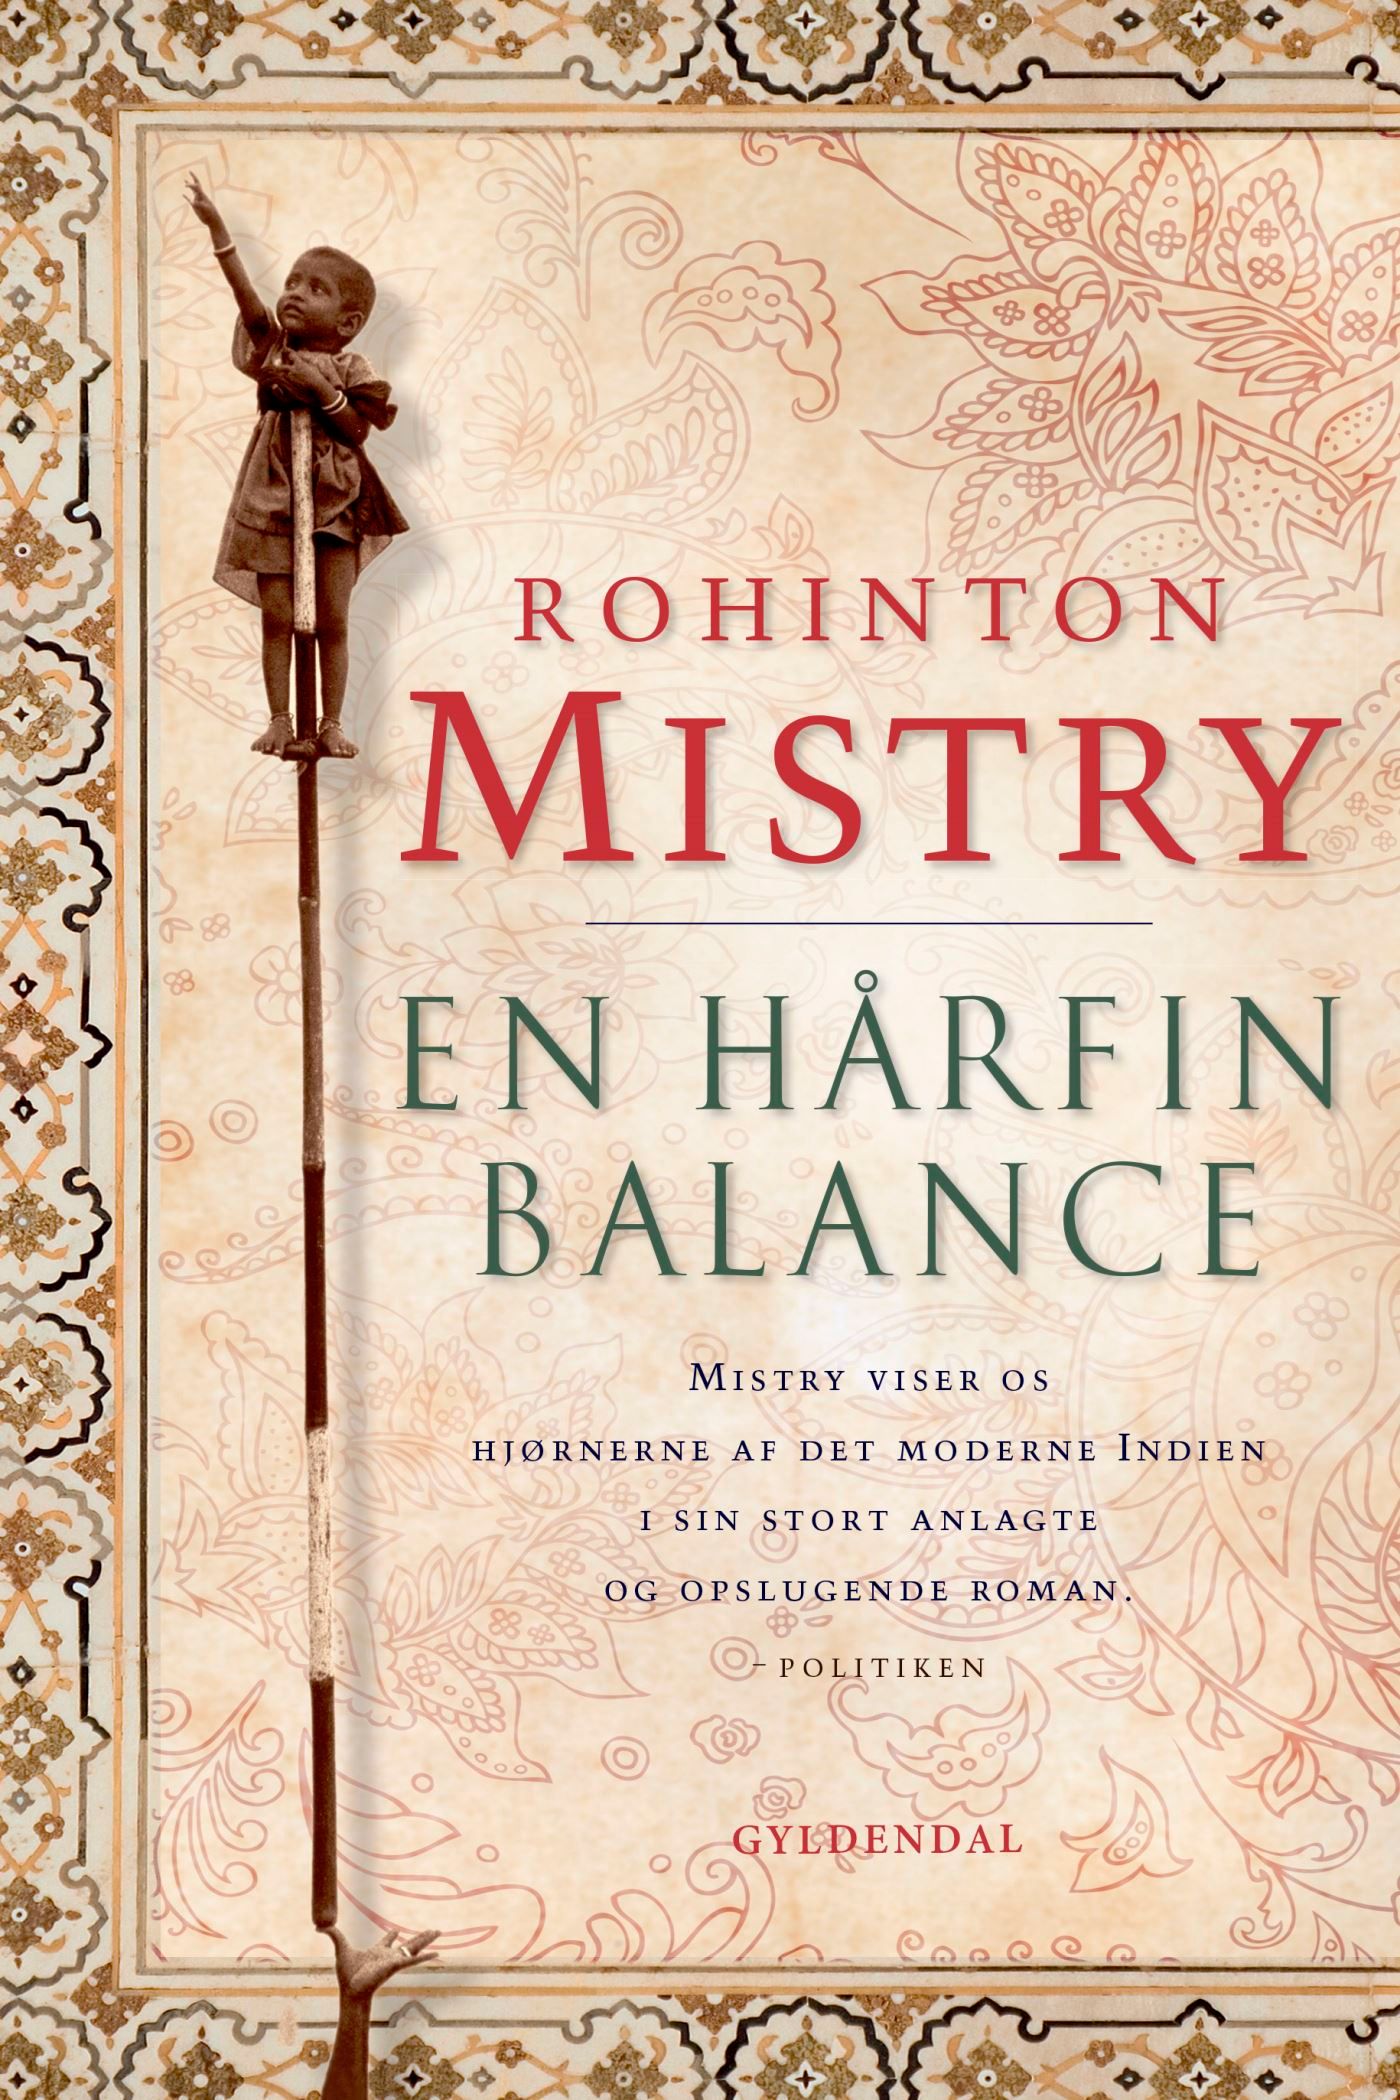 En hårfin balance, e-bok av Rohinton Mistry